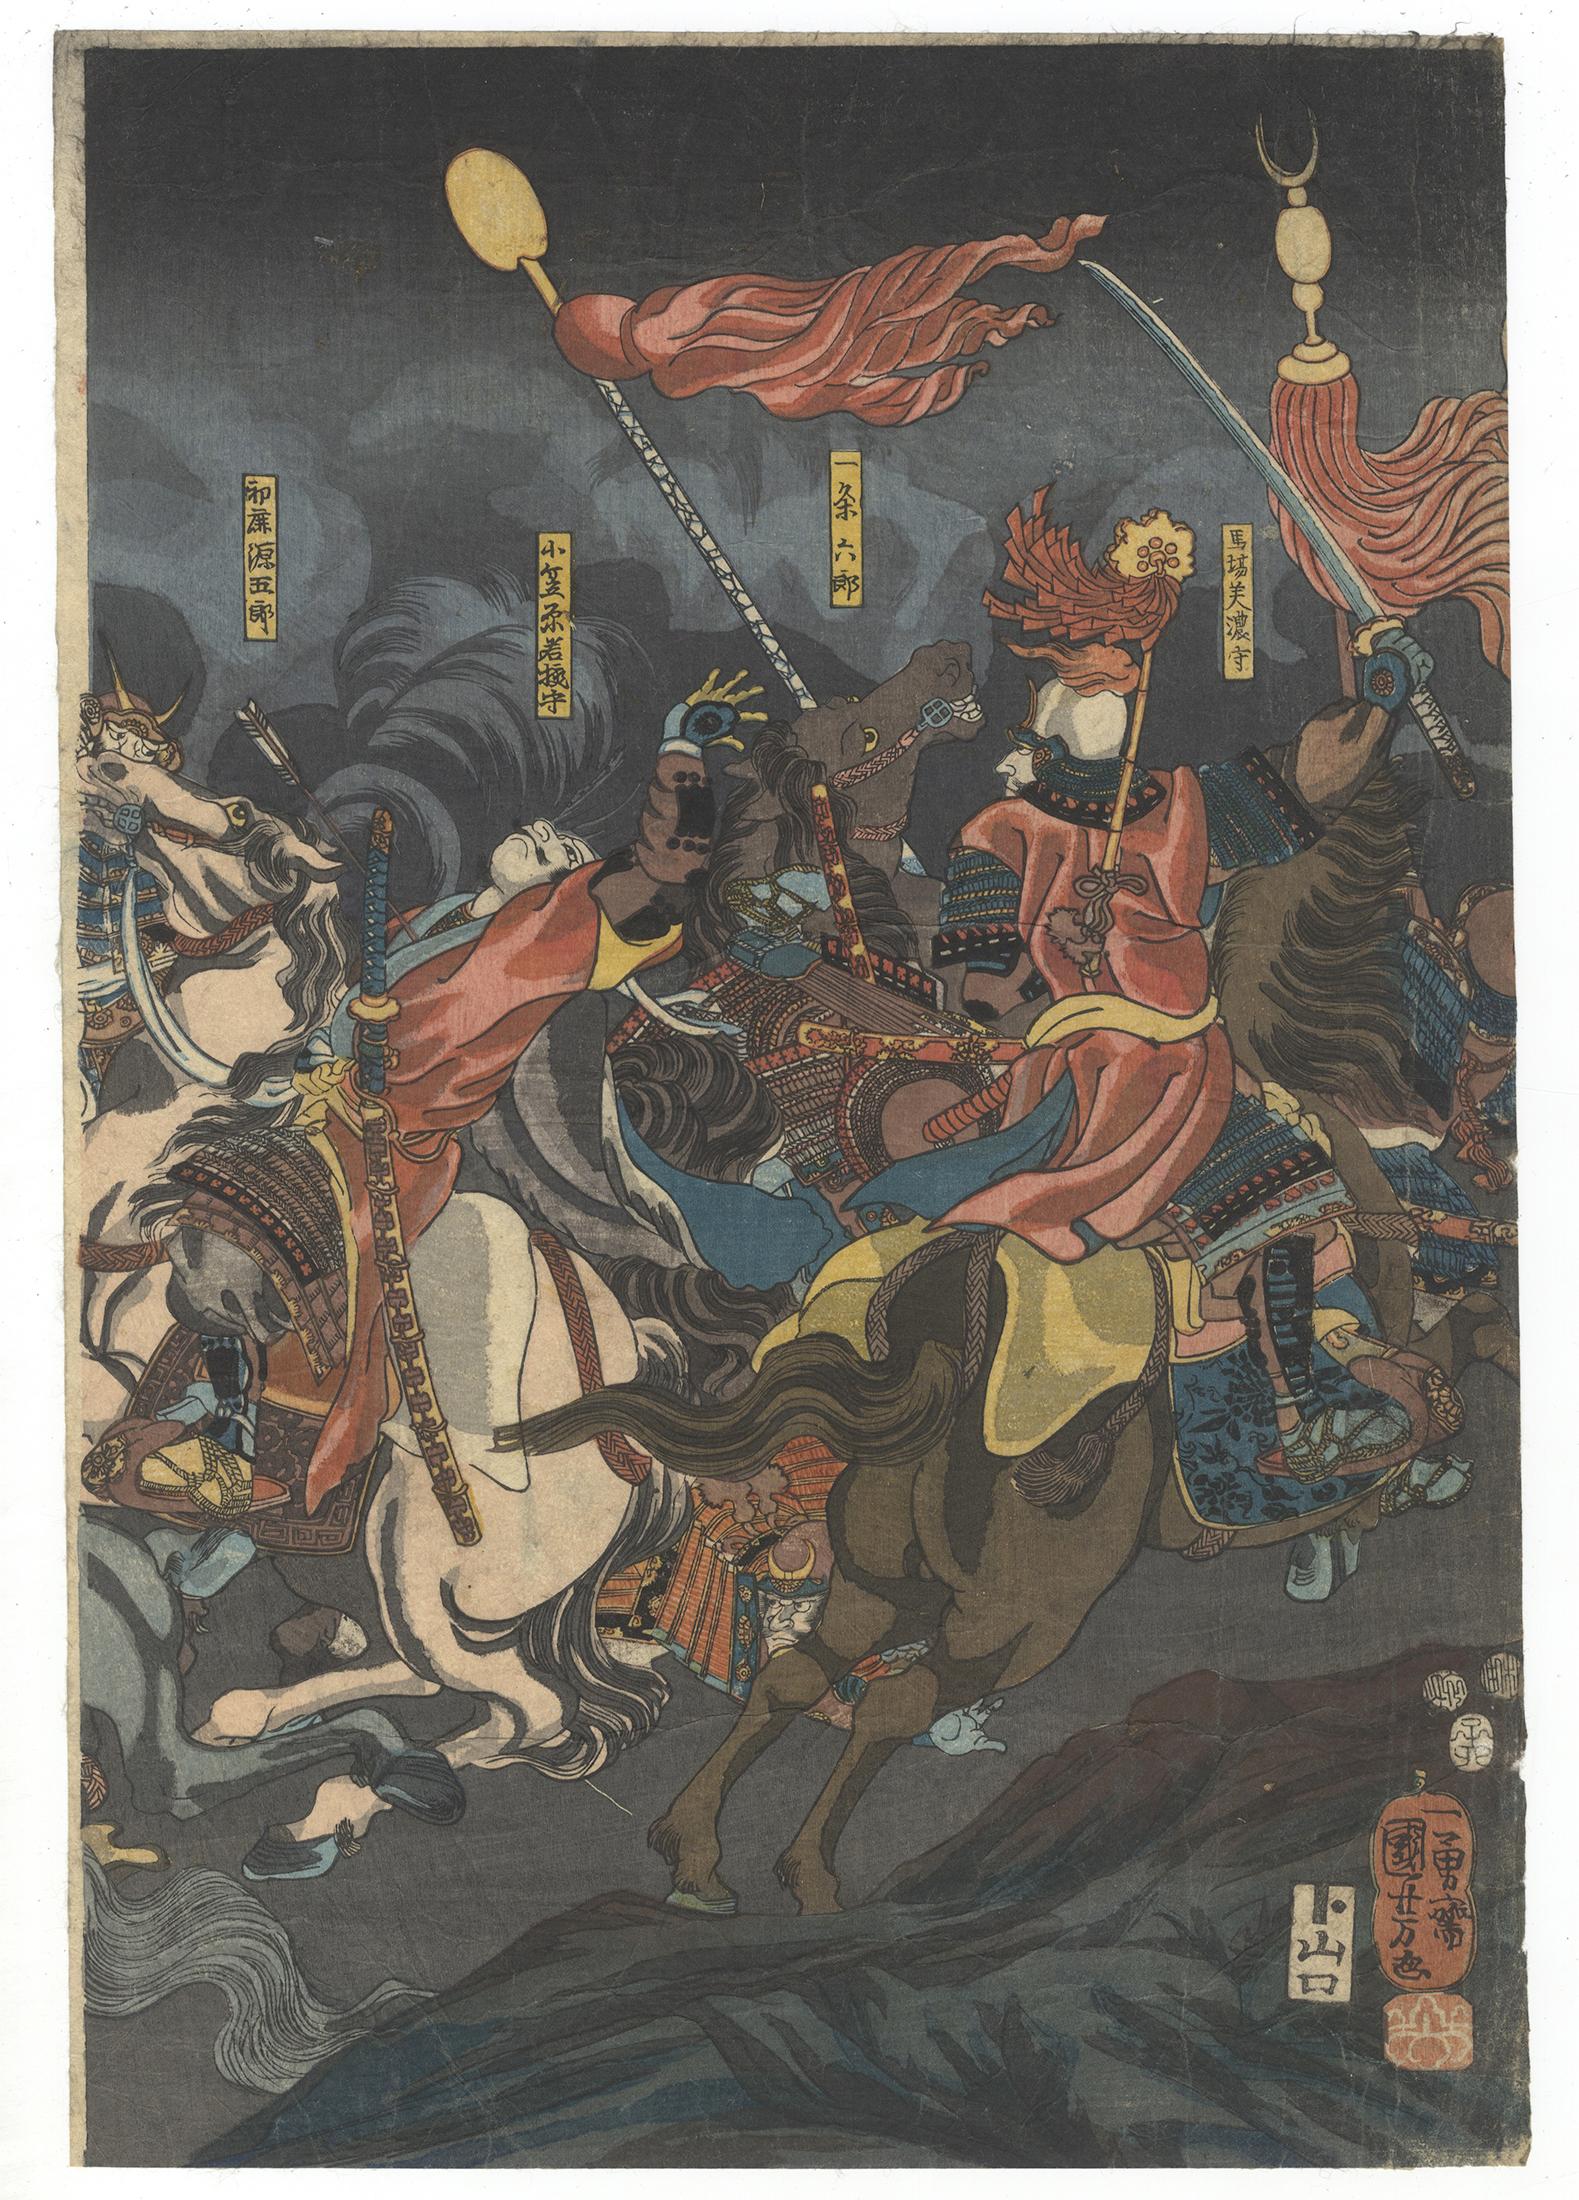 Artist: Kuniyoshi Utagawa (1798-1861)
Title: The Great Battle of Kawanakajima
Publisher: Yamaguchiya Tobei
Date: 1852
Size: (L) 25.2 x 36.3 (C) 25.0 x 36.3 (R) 24.8 x 36.2 cm
Condition: Wear on the bottom right corner (right panel). Slightly